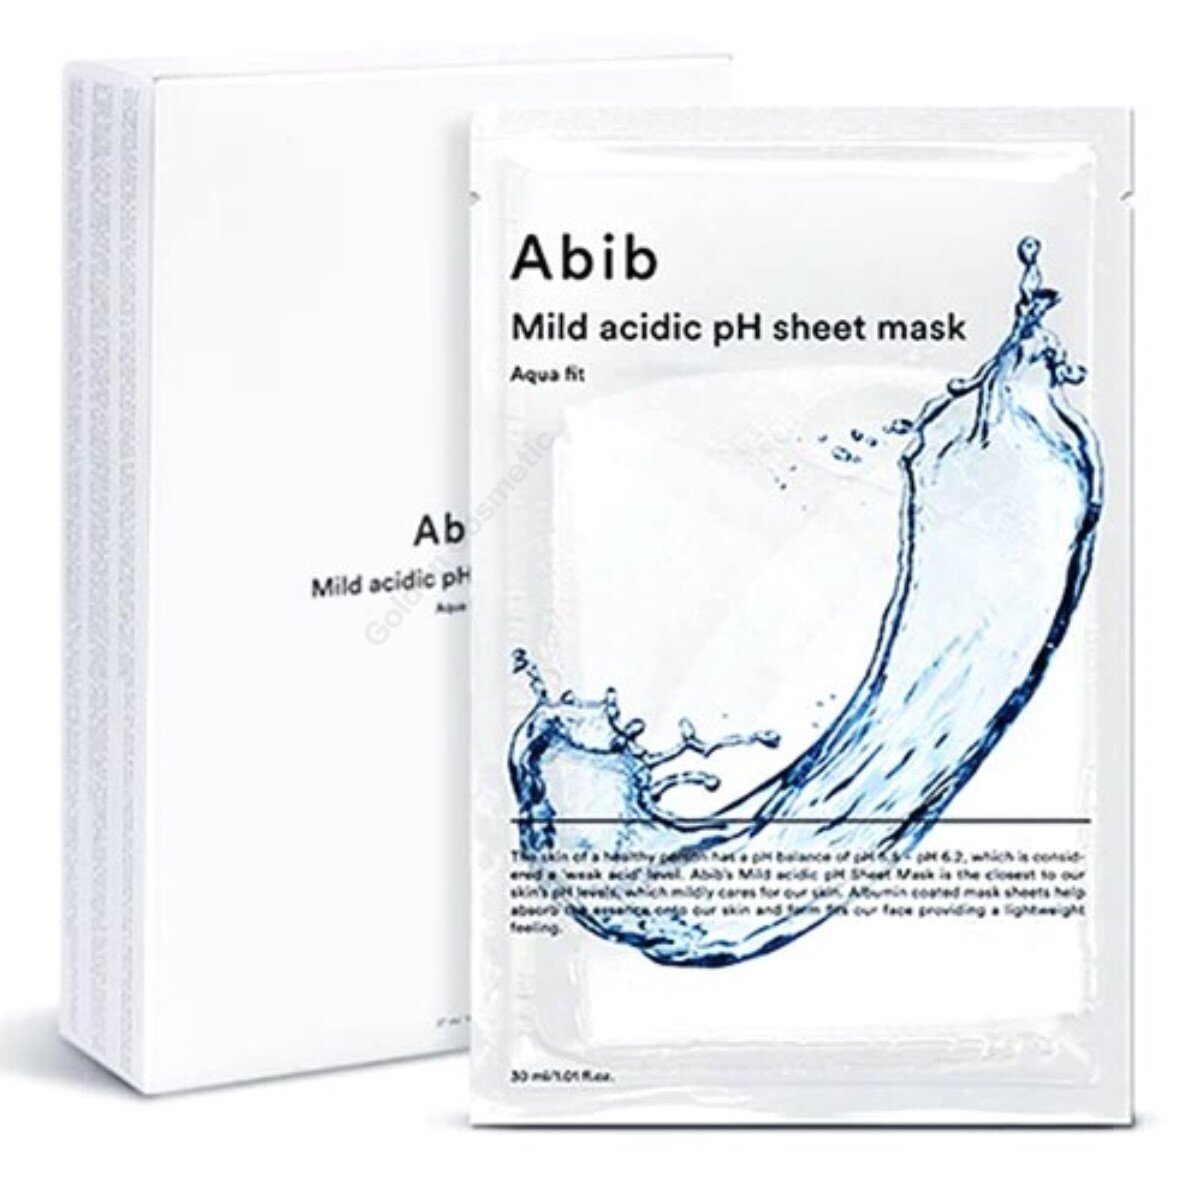 Mild Acidic pH Sheet Mask Aqua Fit 30ml x 10pcs (Parallel Import)